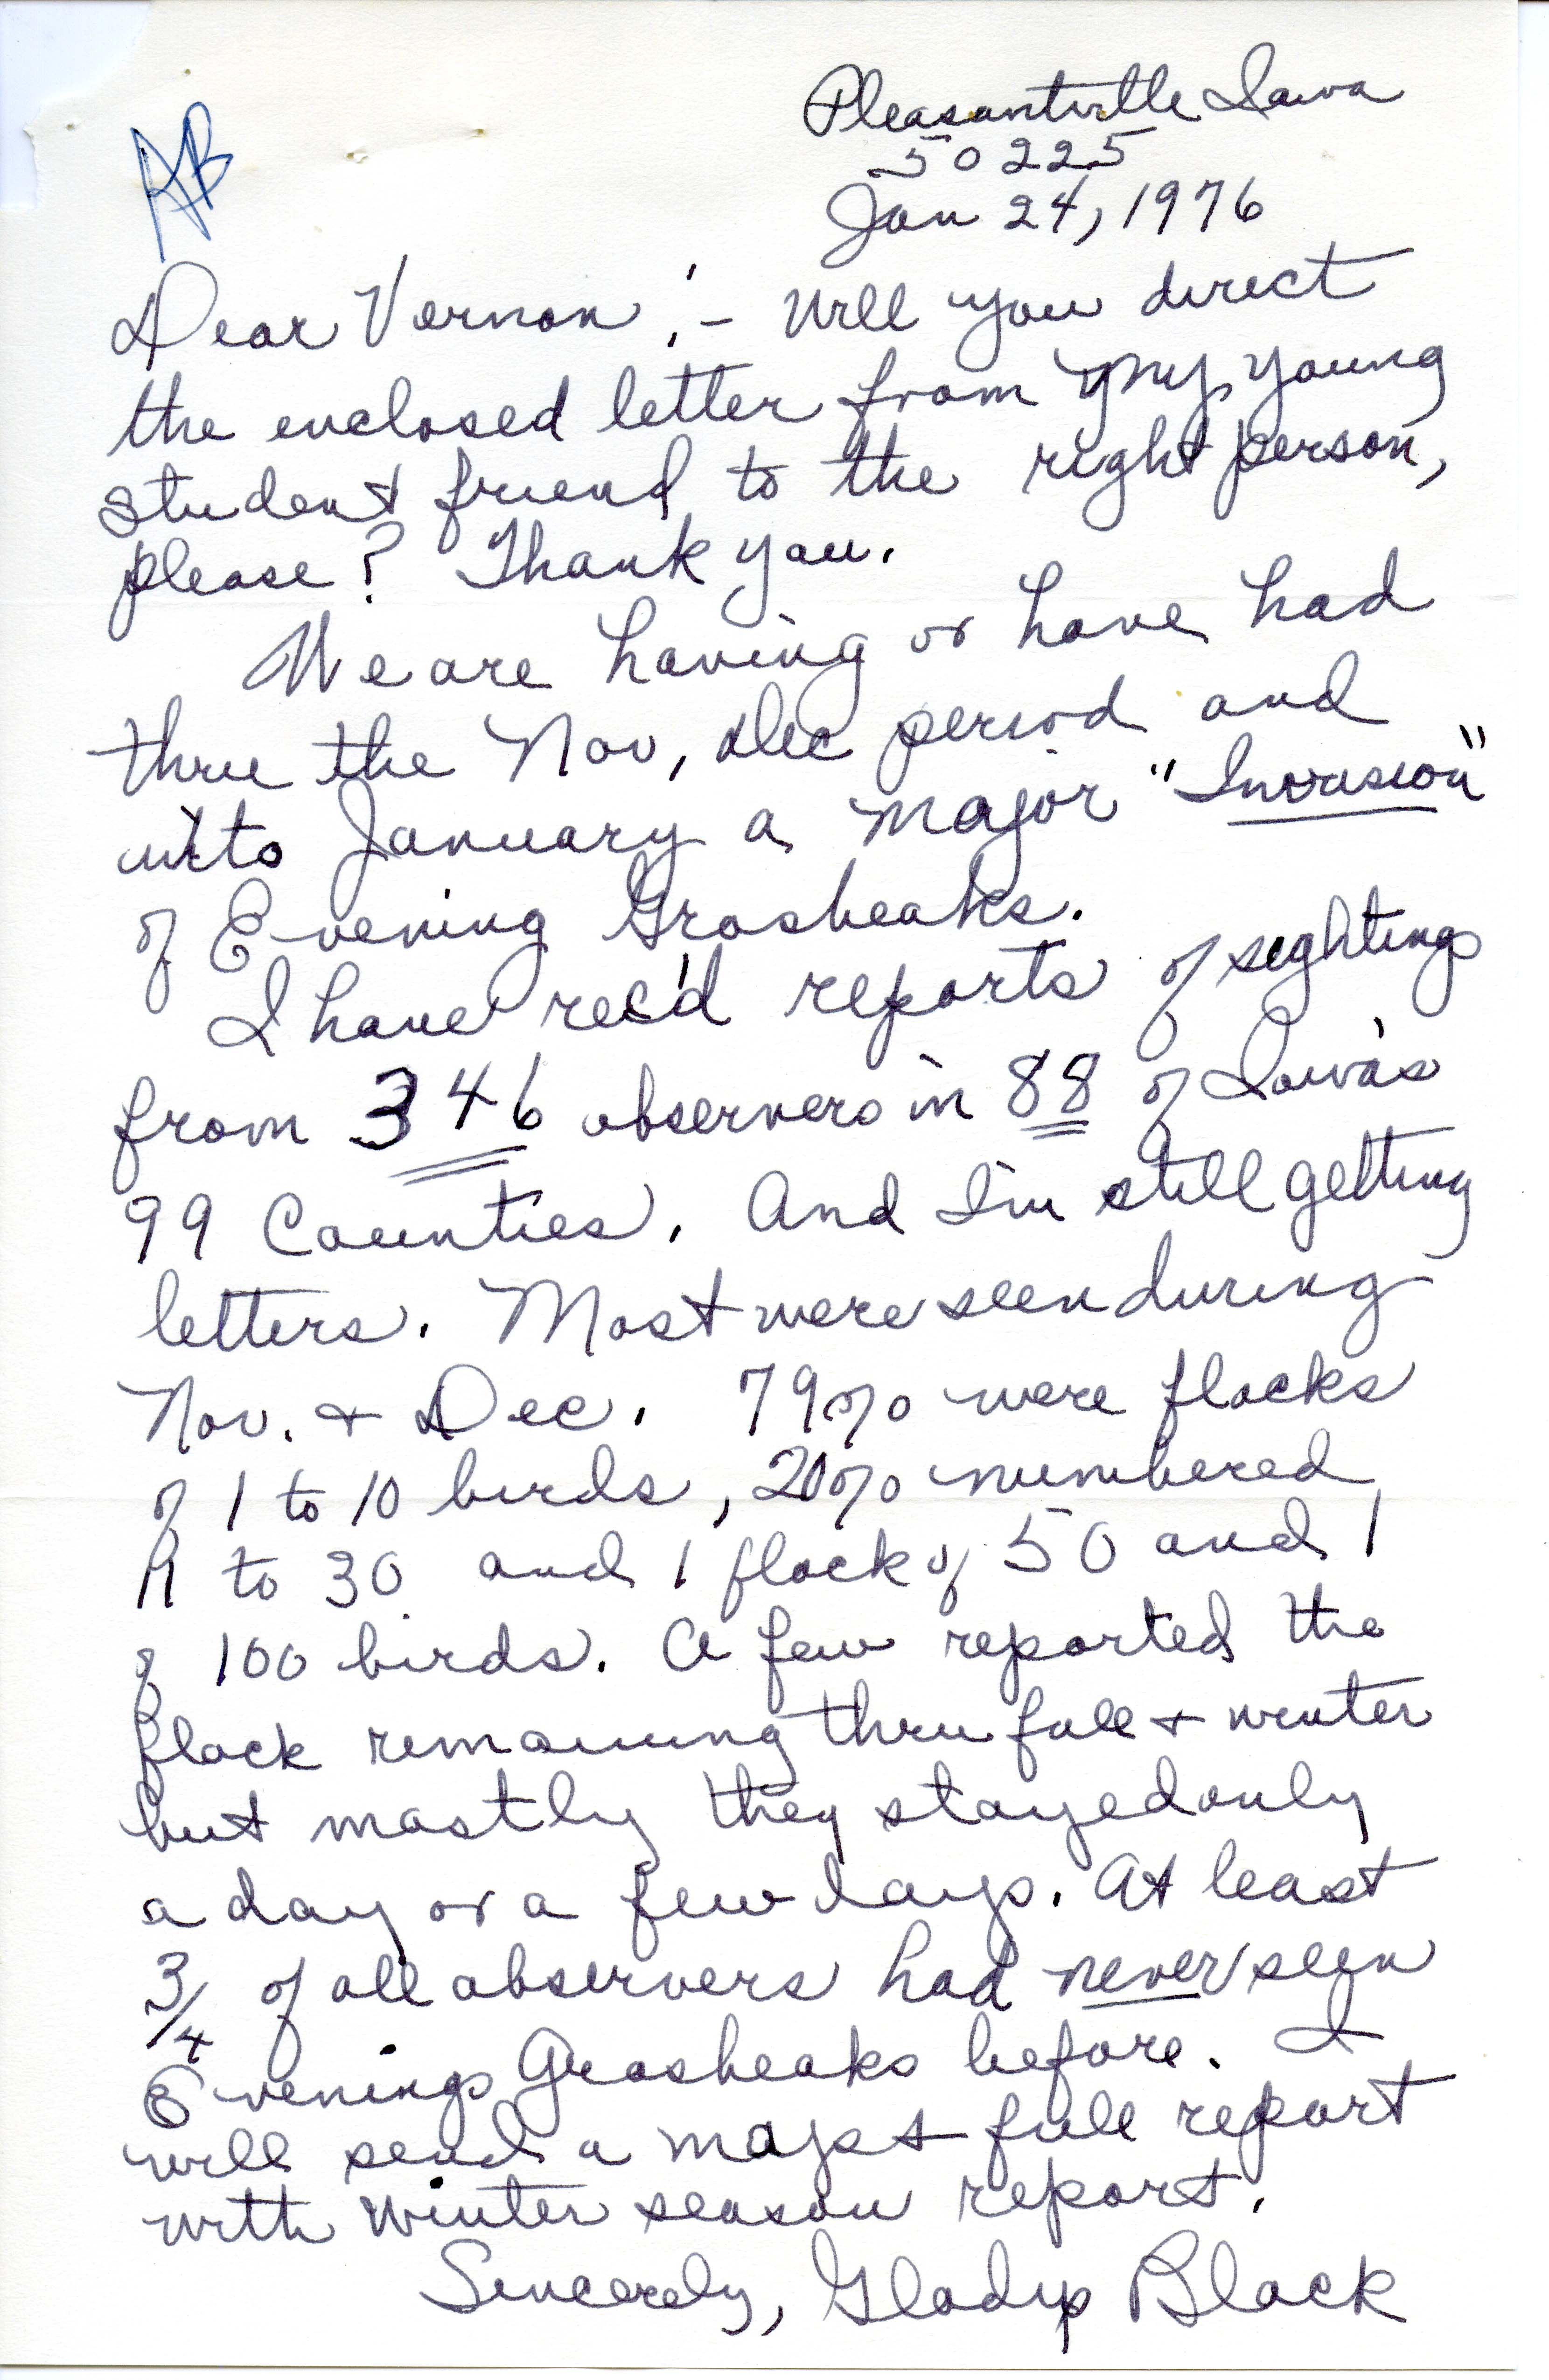 Gladys Black letter to Vernon Kleen regarding Evening Grosbeak invasion, January 24, 1976